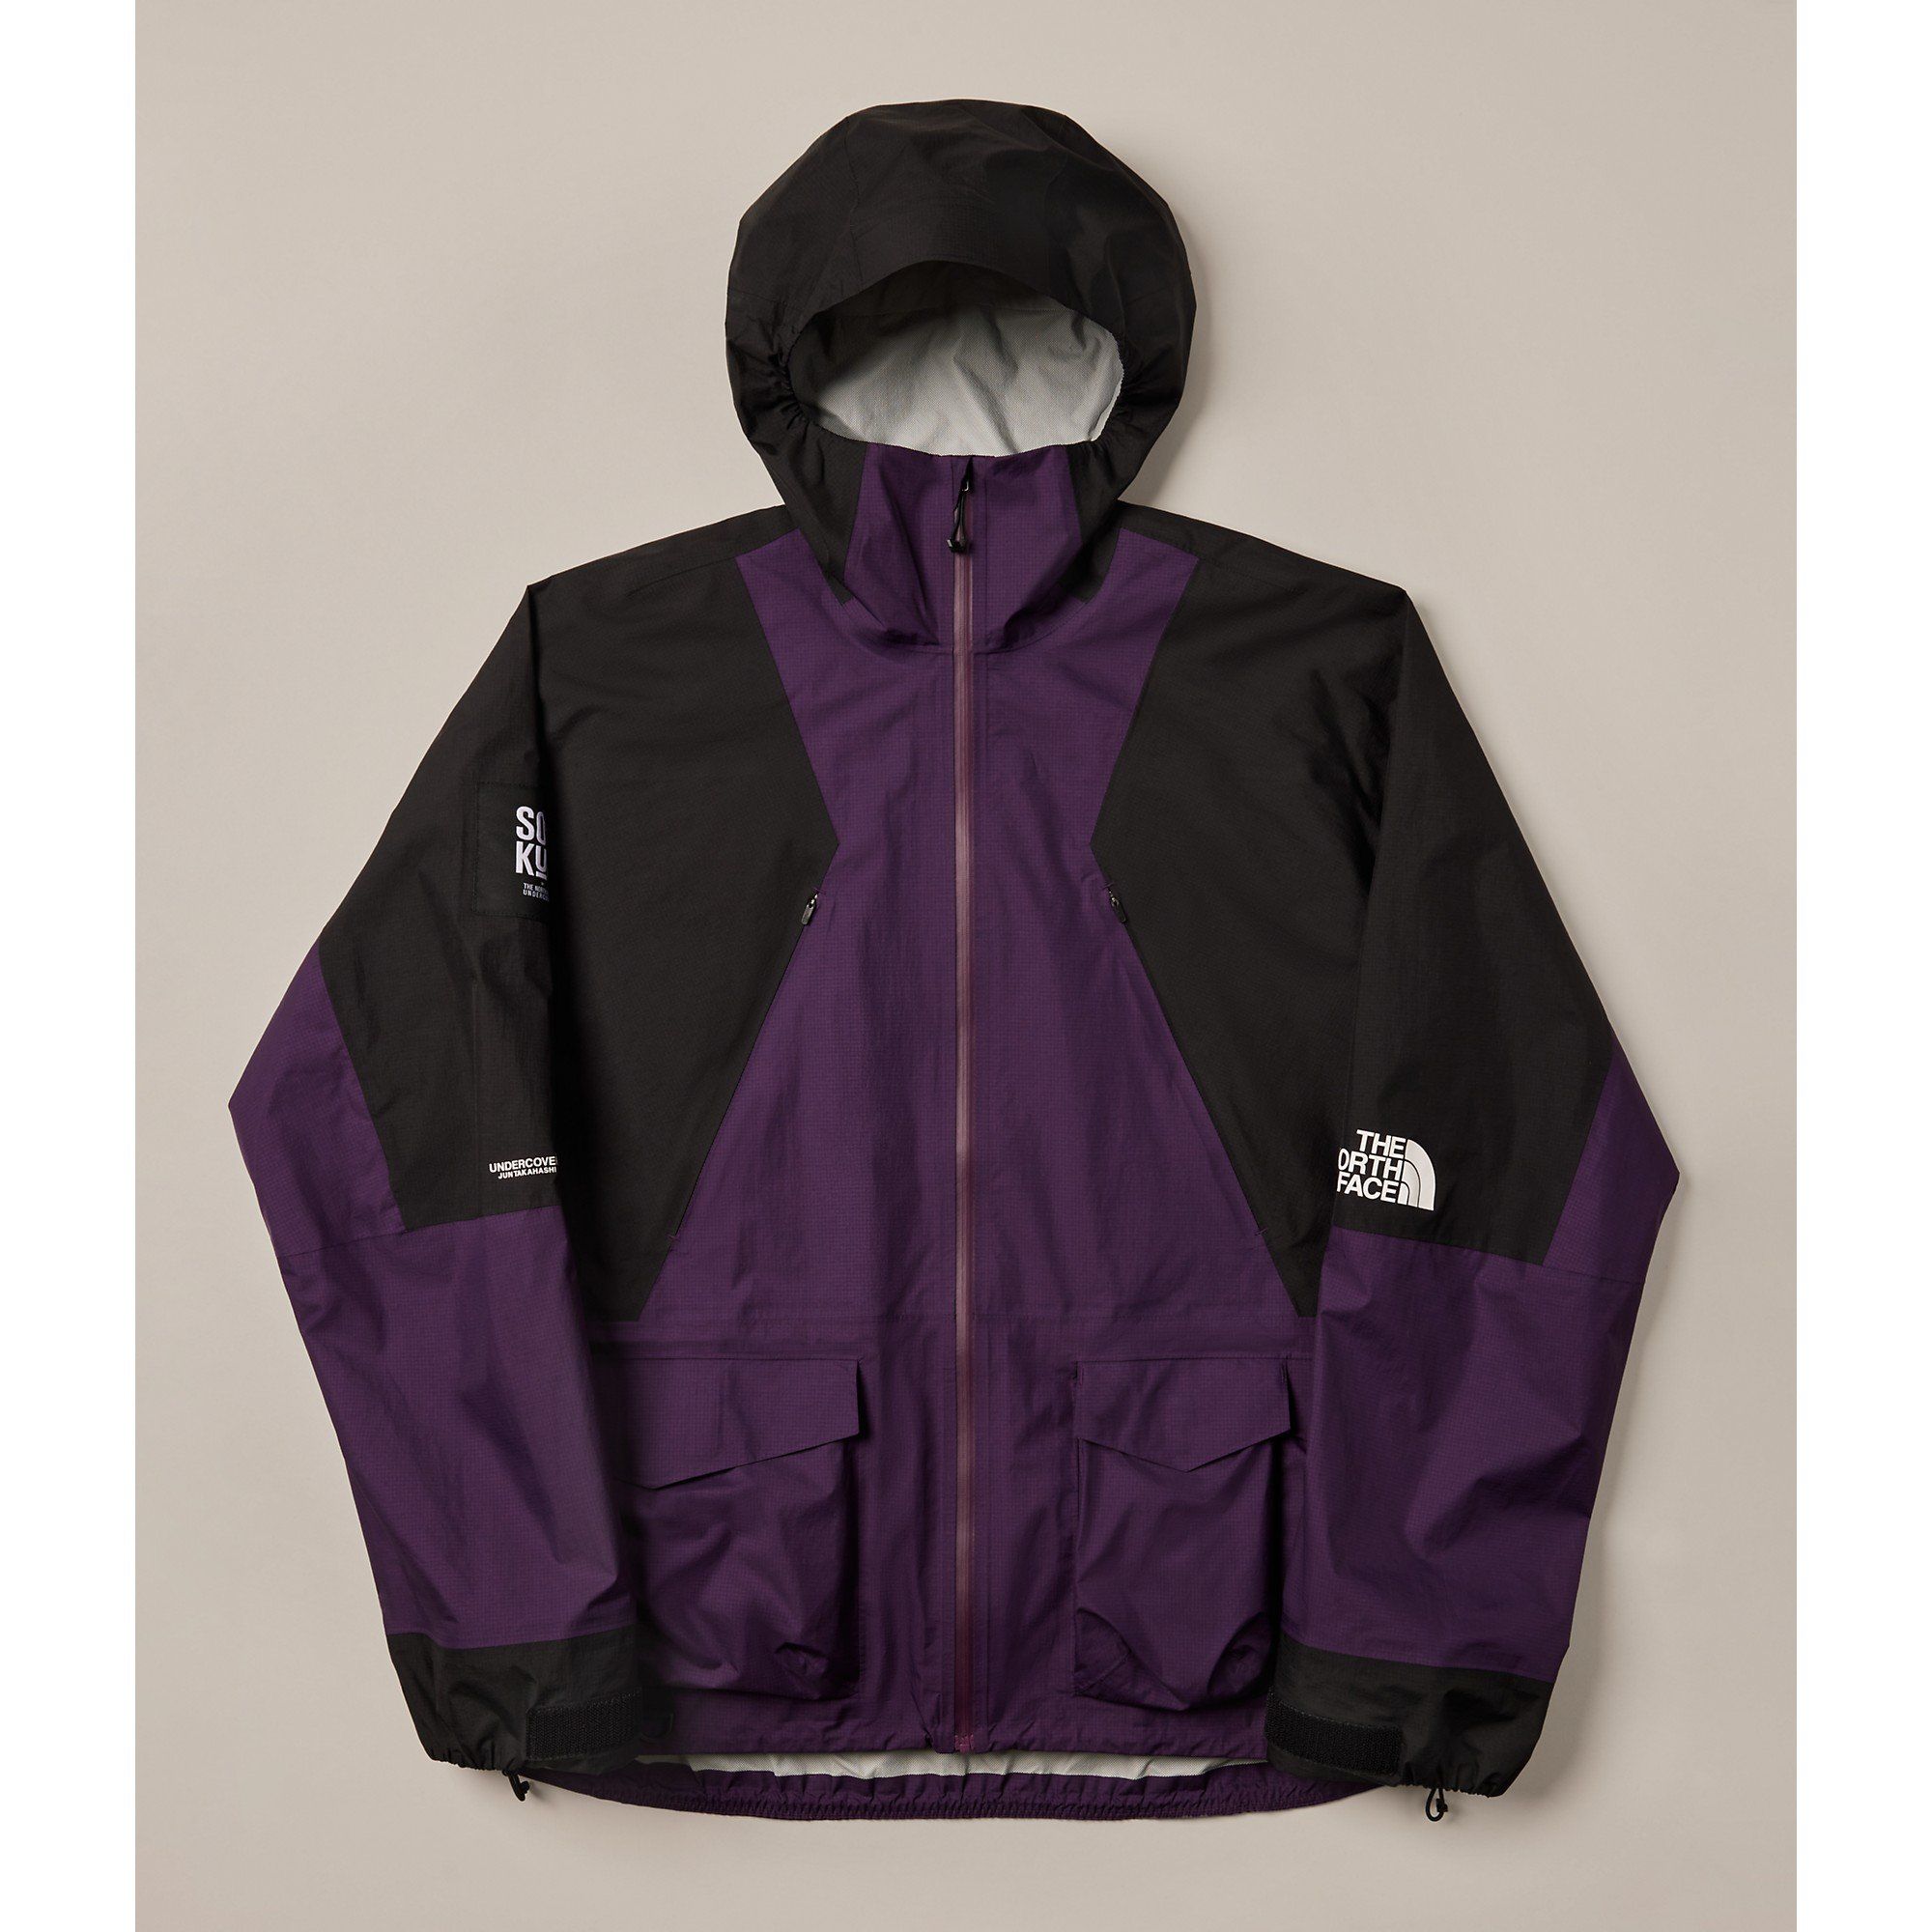  TNF x UNDERCOVER SOUKUU Hike Packable Mountain Light Shell Jacket - Purple 